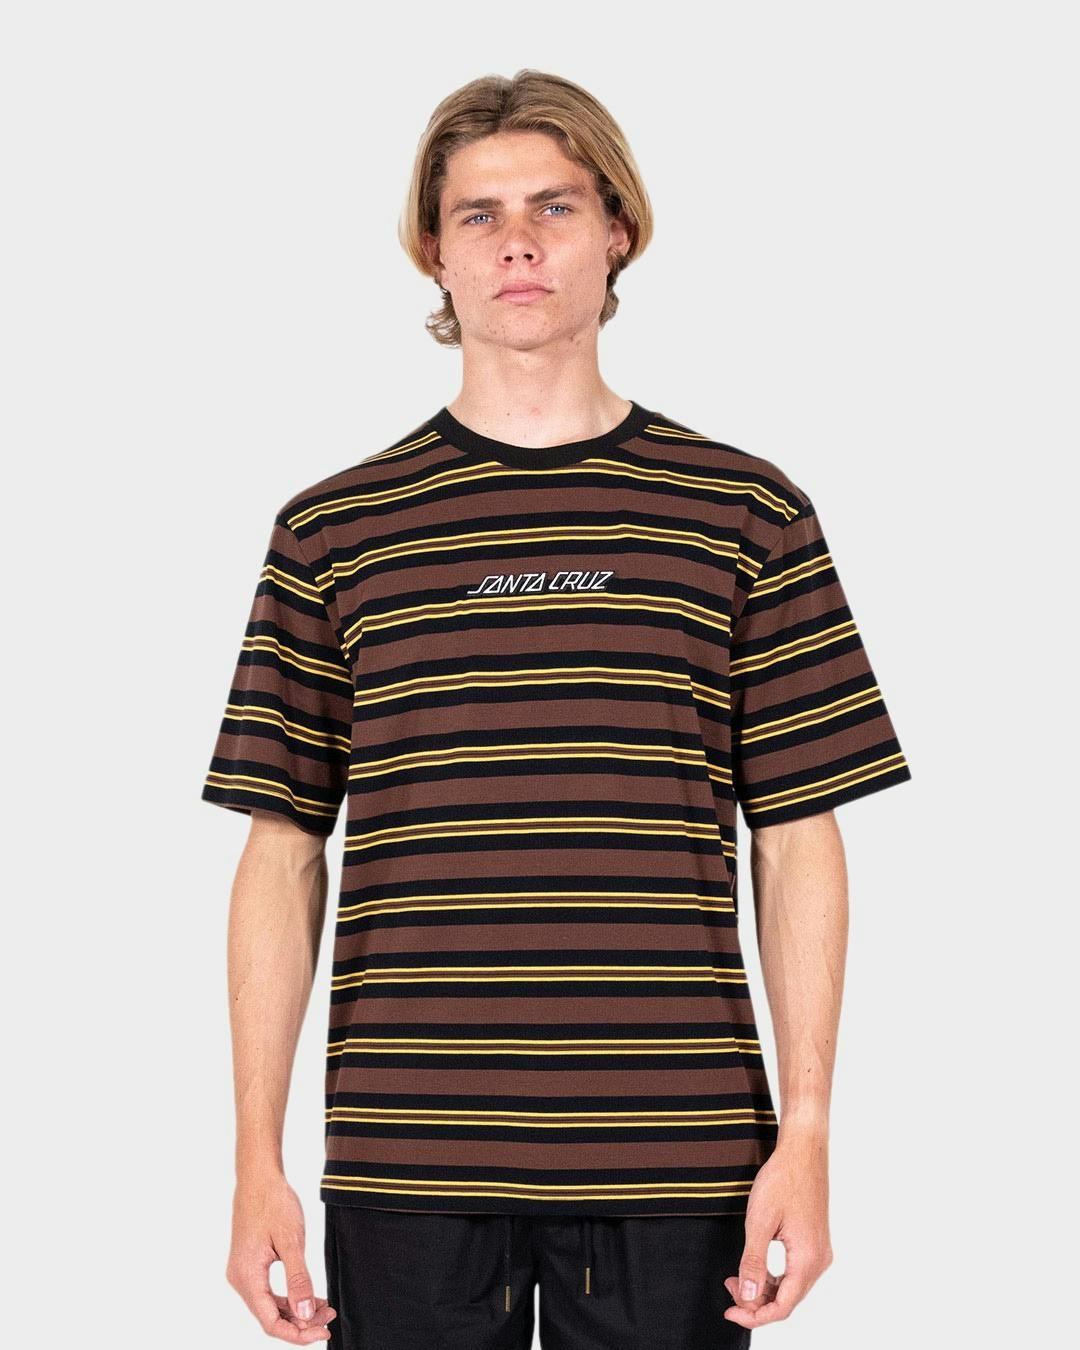 Strip Yarn Dye Santa Cruz Men's S/S T-shirt - Brown Stripe